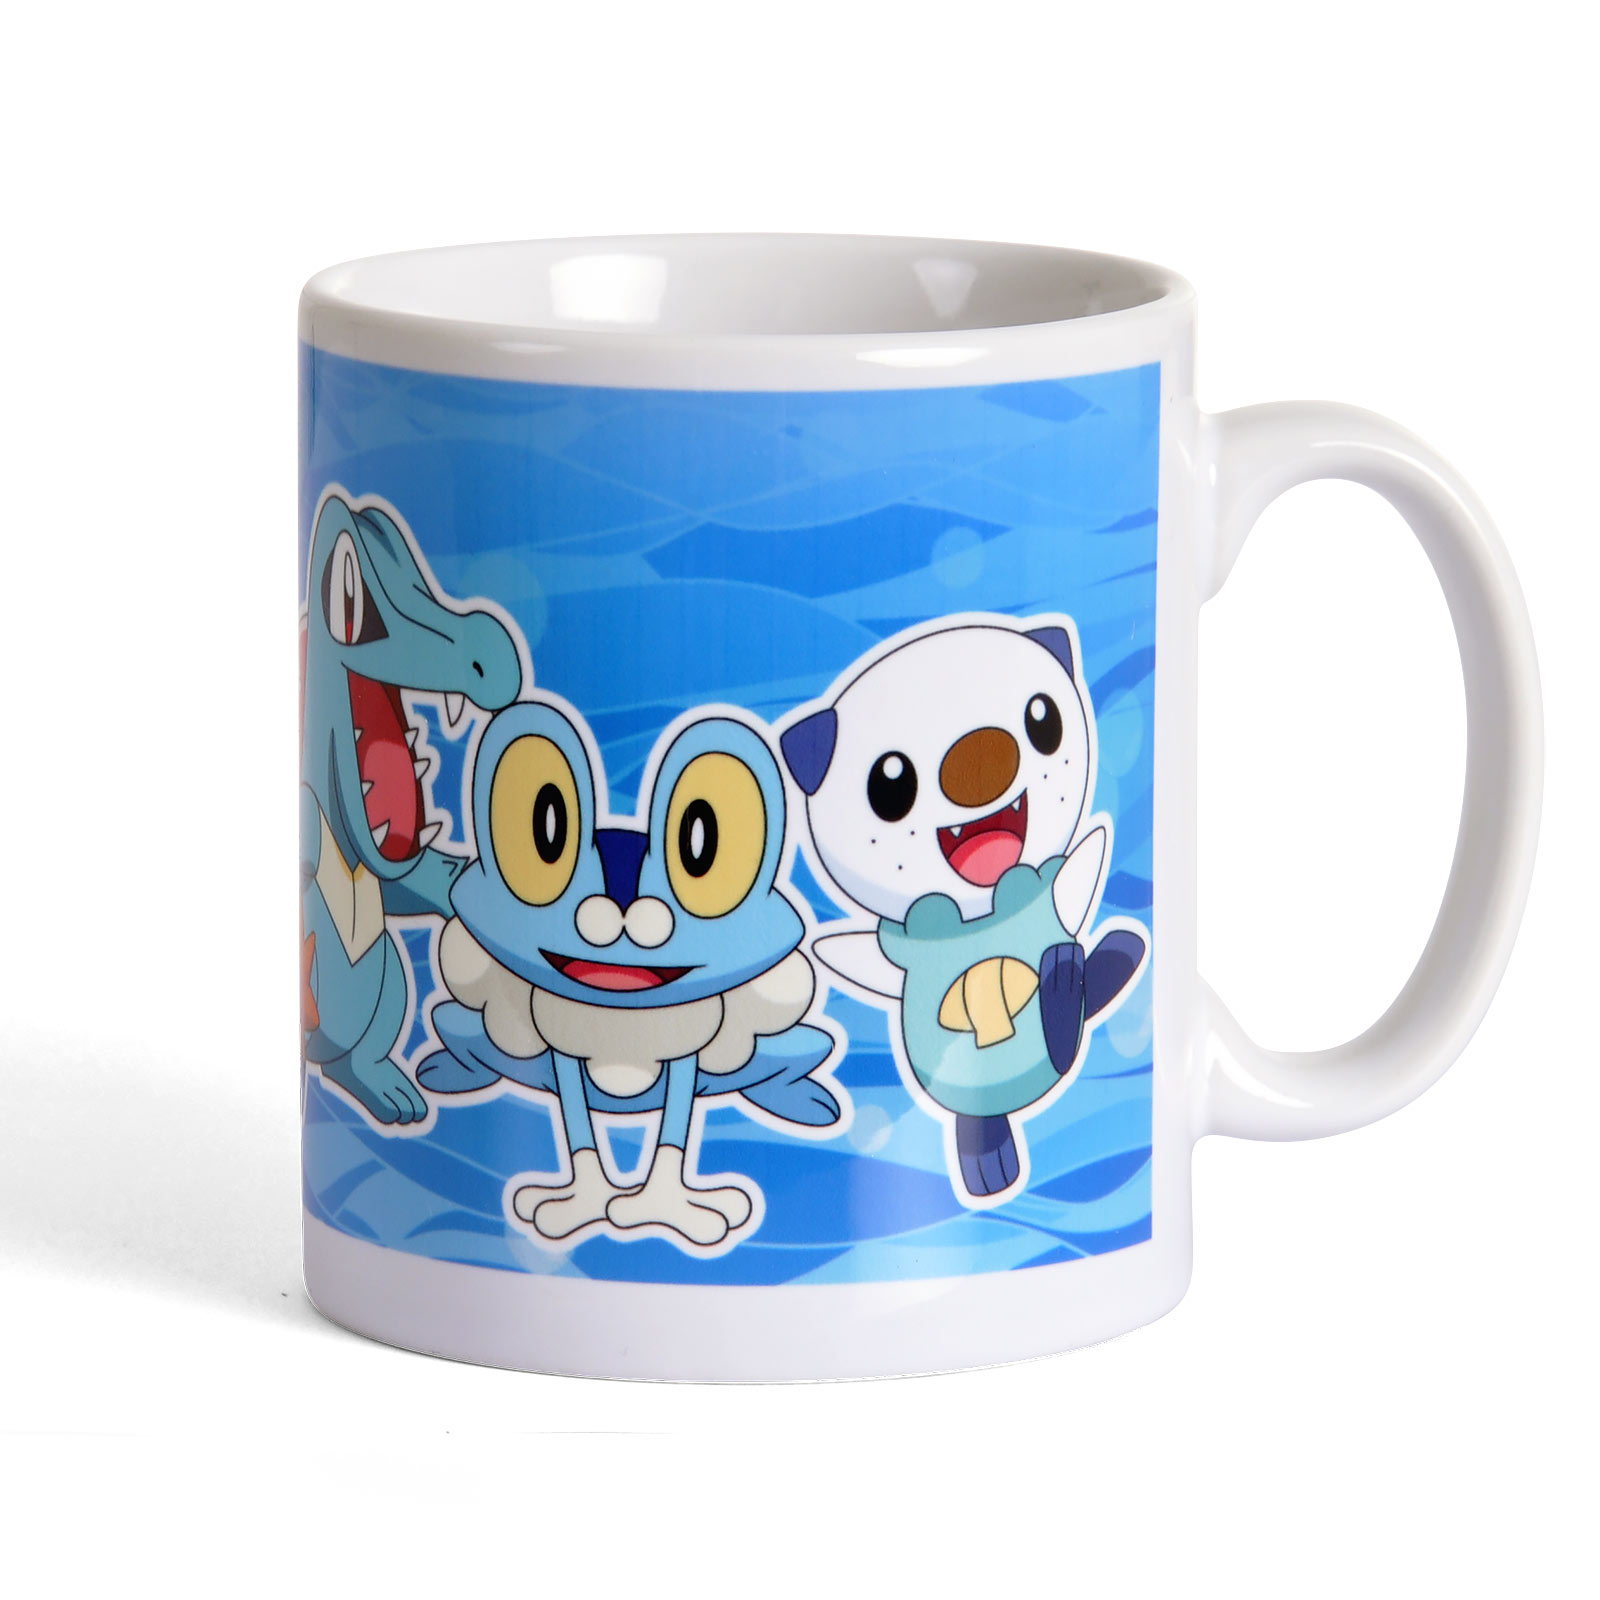 Pokemon - Water Partners Mug